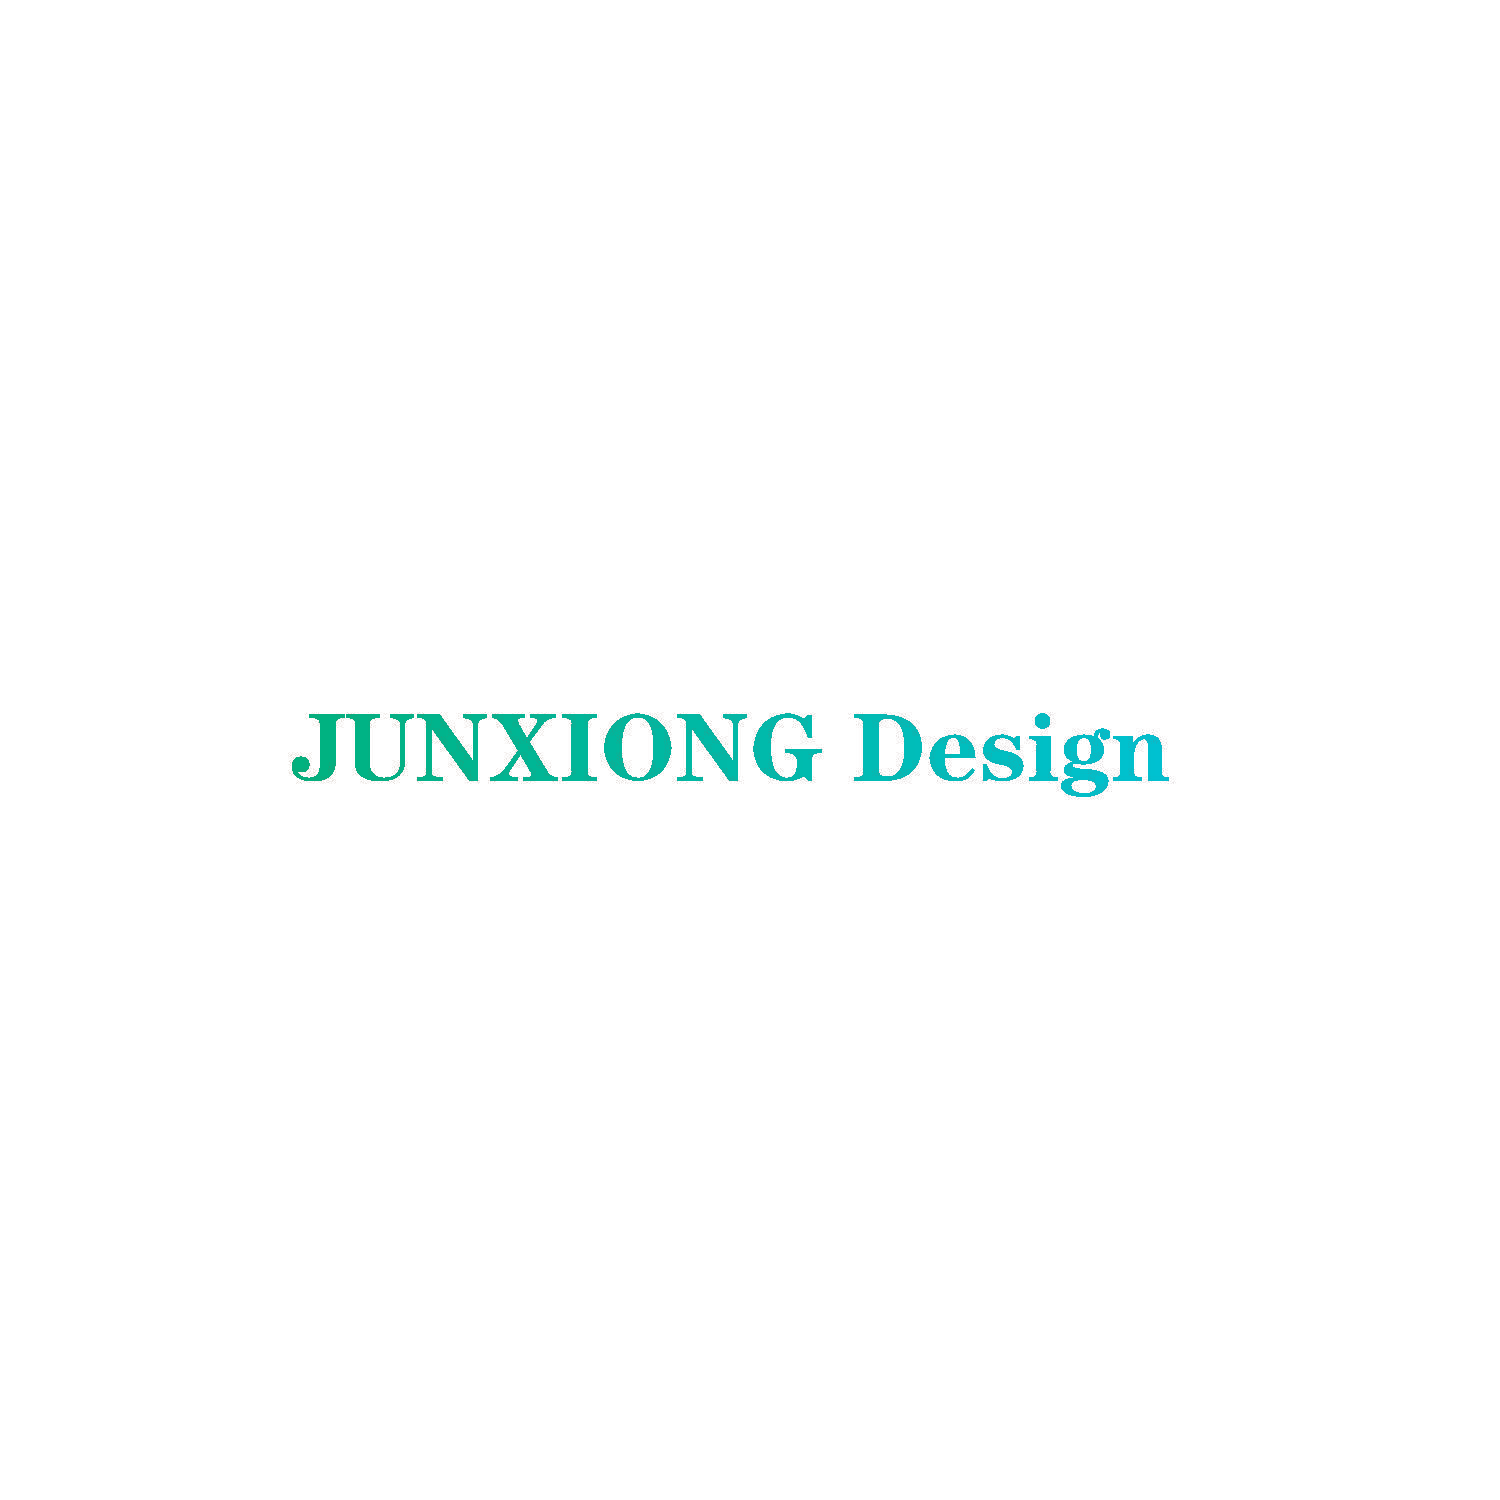 JUNXIONG Design